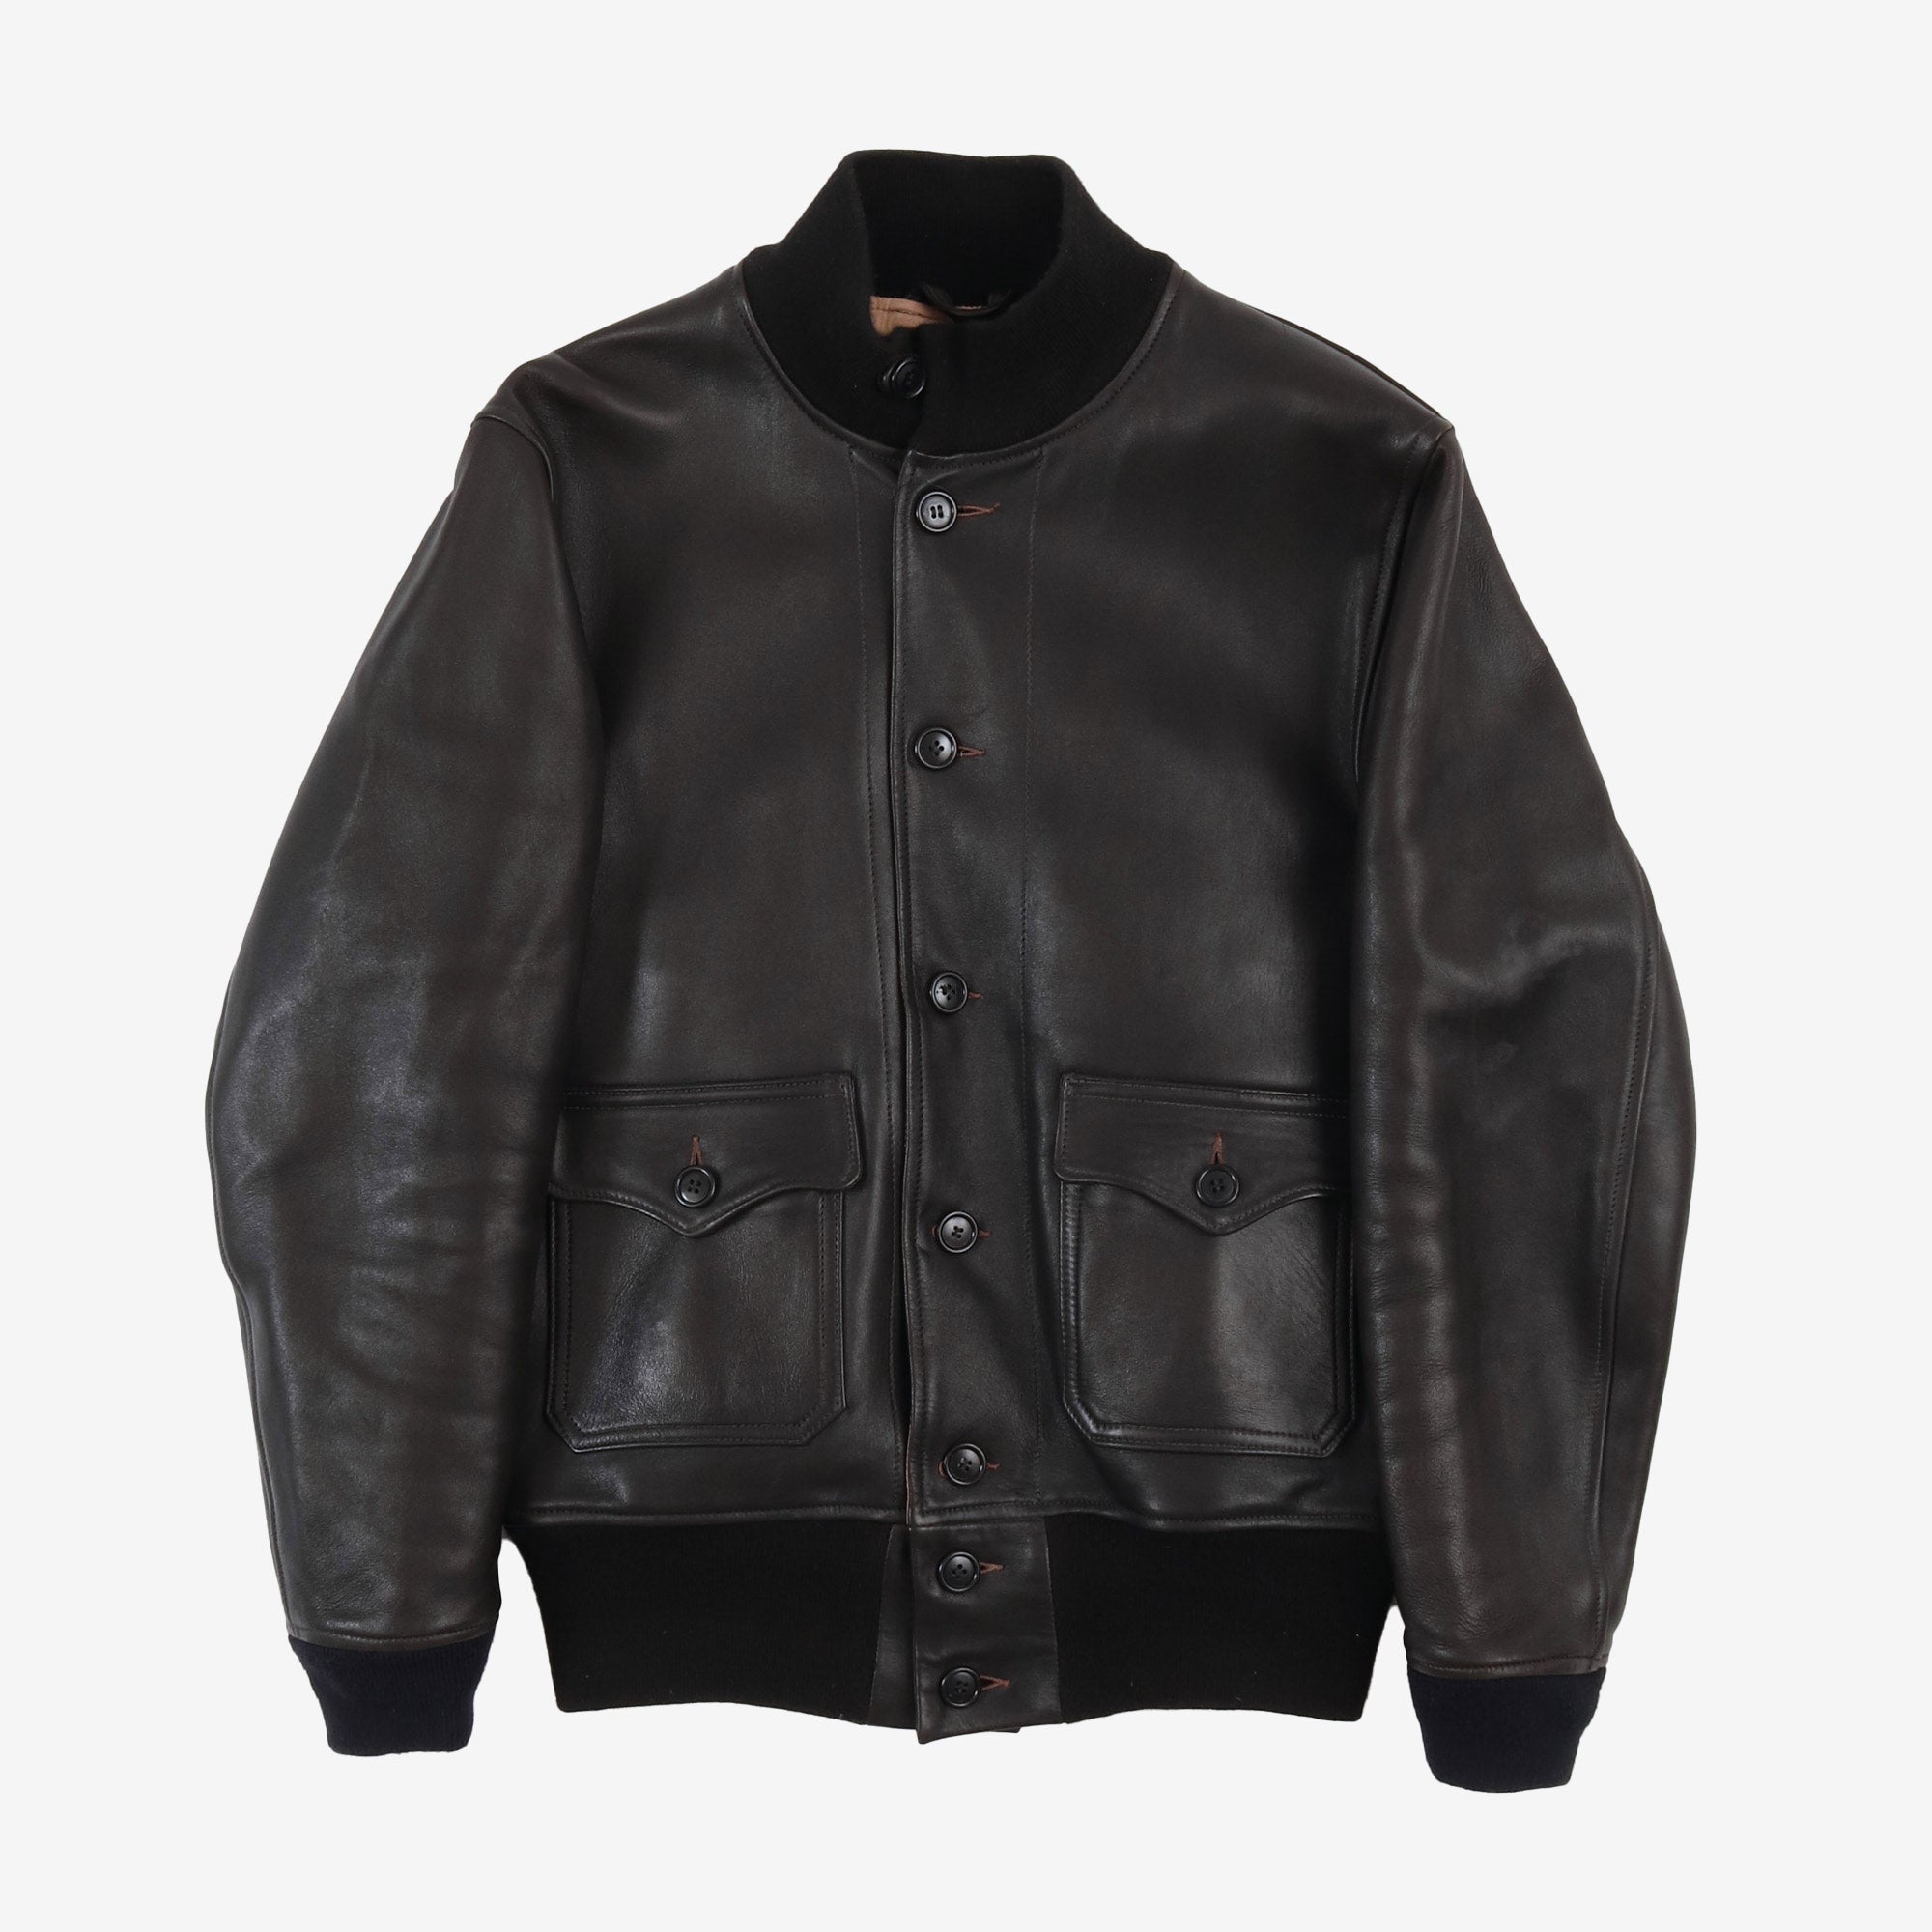 A-1 Leather Jacket